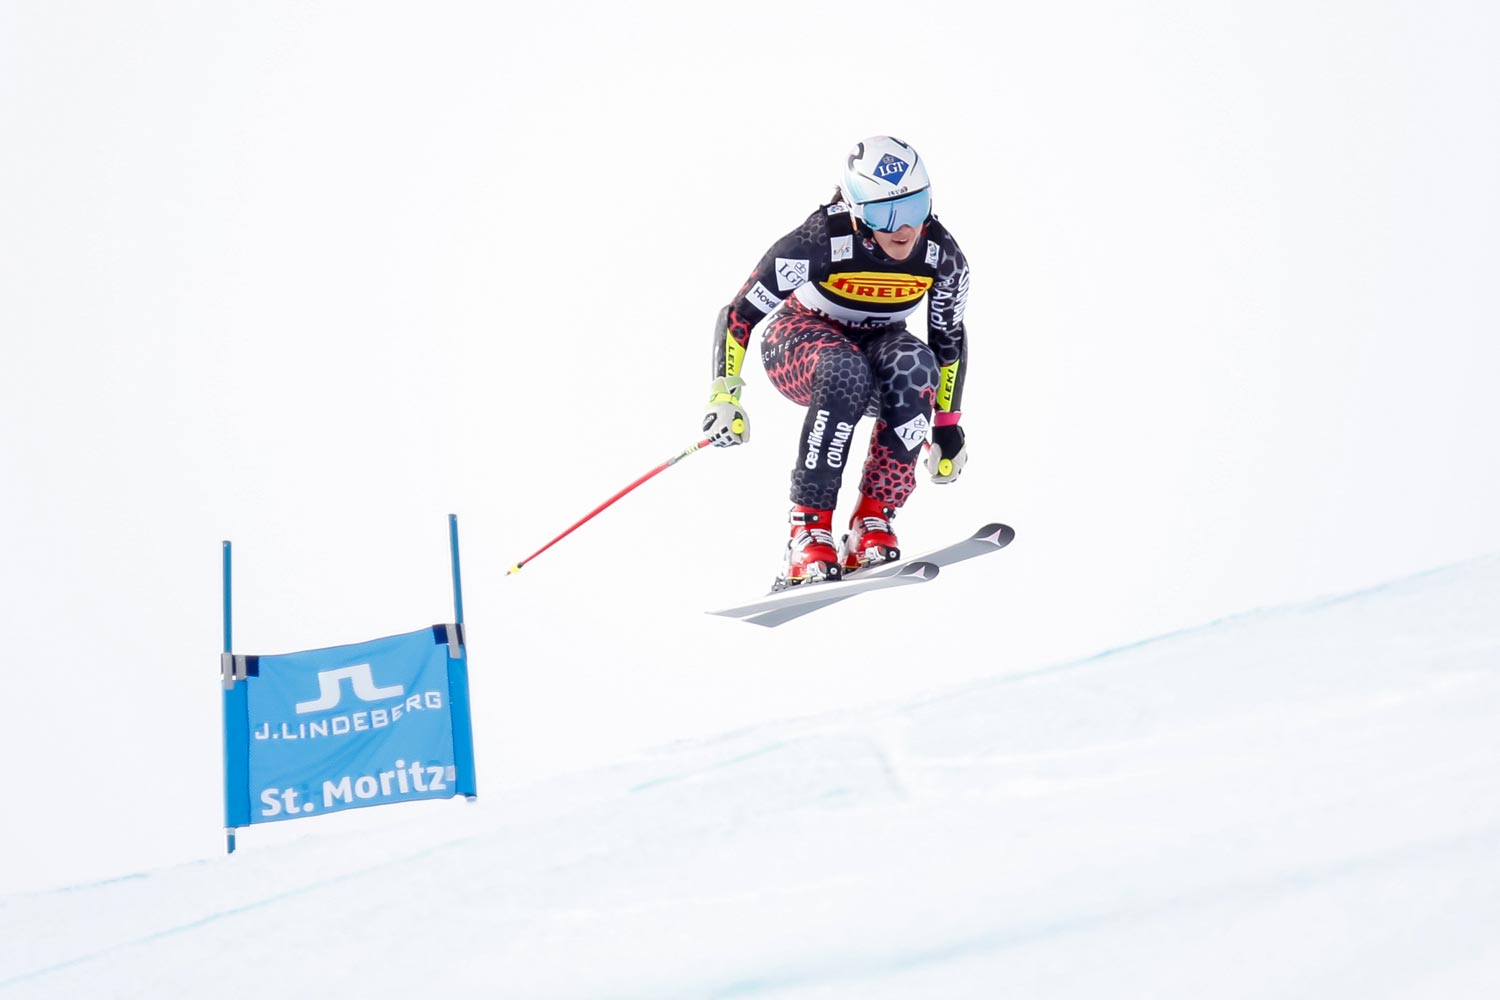 Campionati mondiali di sci alpino 2017 St. Moritz, Super G donne, Tina Weirather